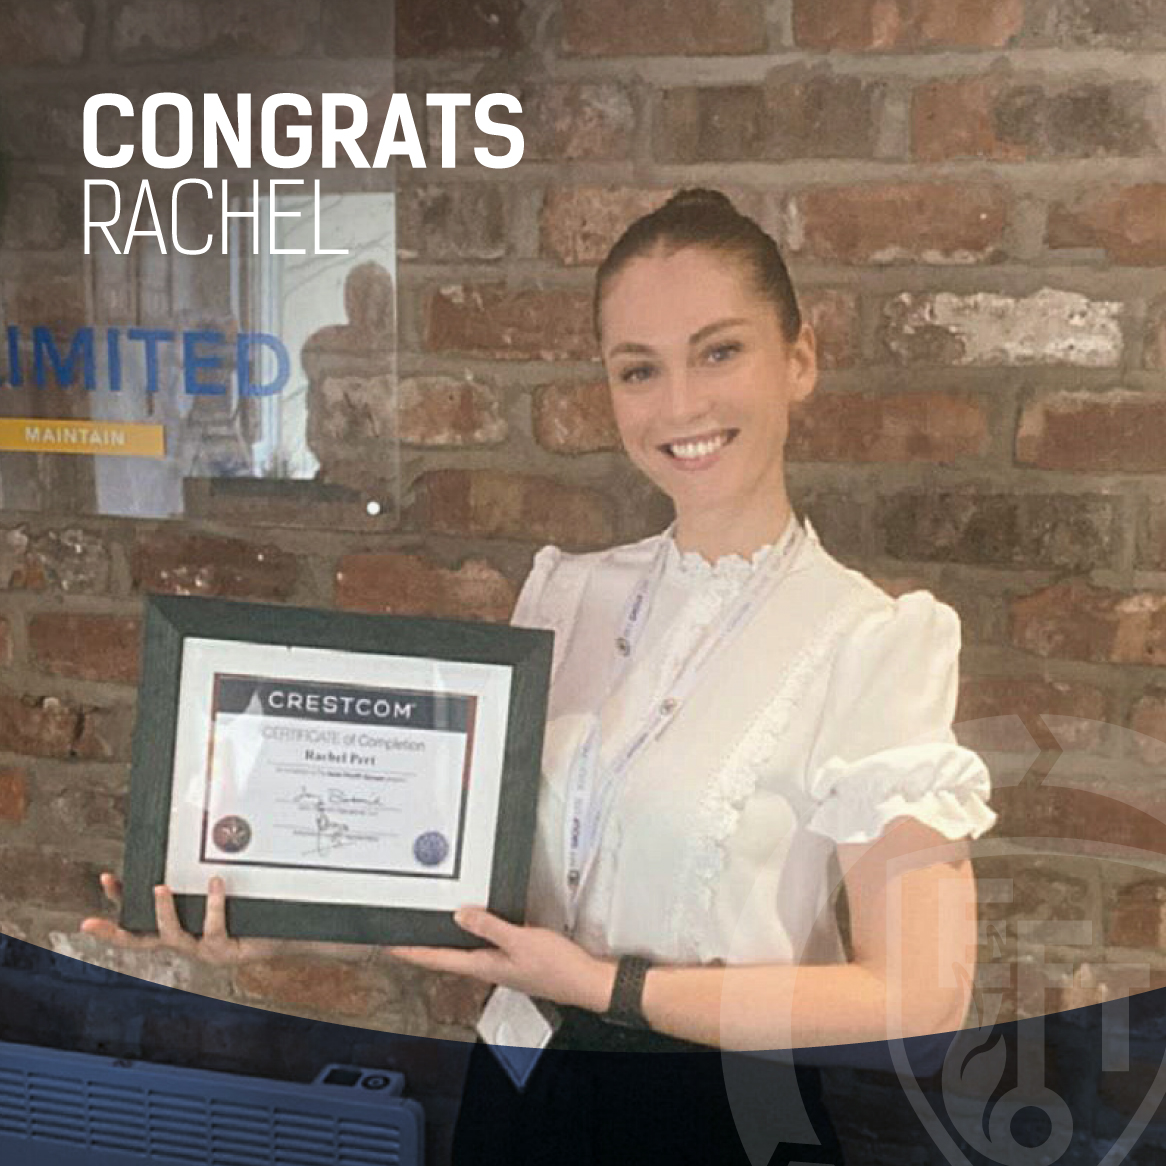 Congrats Rachel!